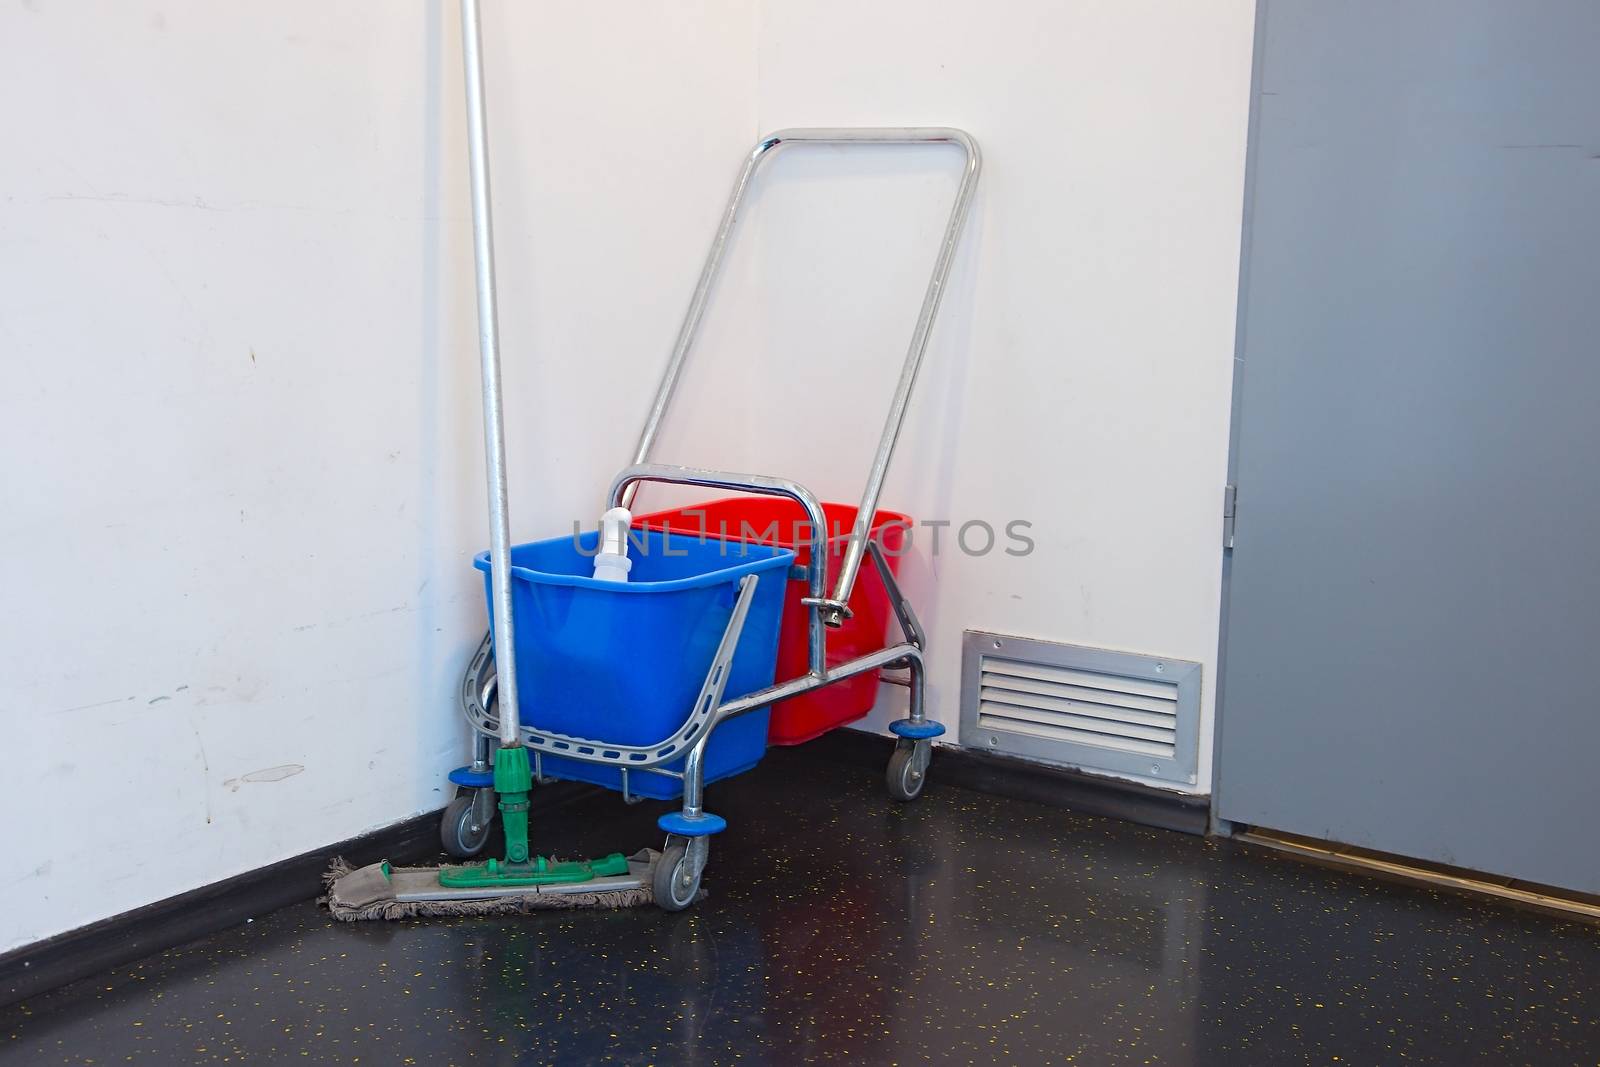 Cleaning trolley by Gudella